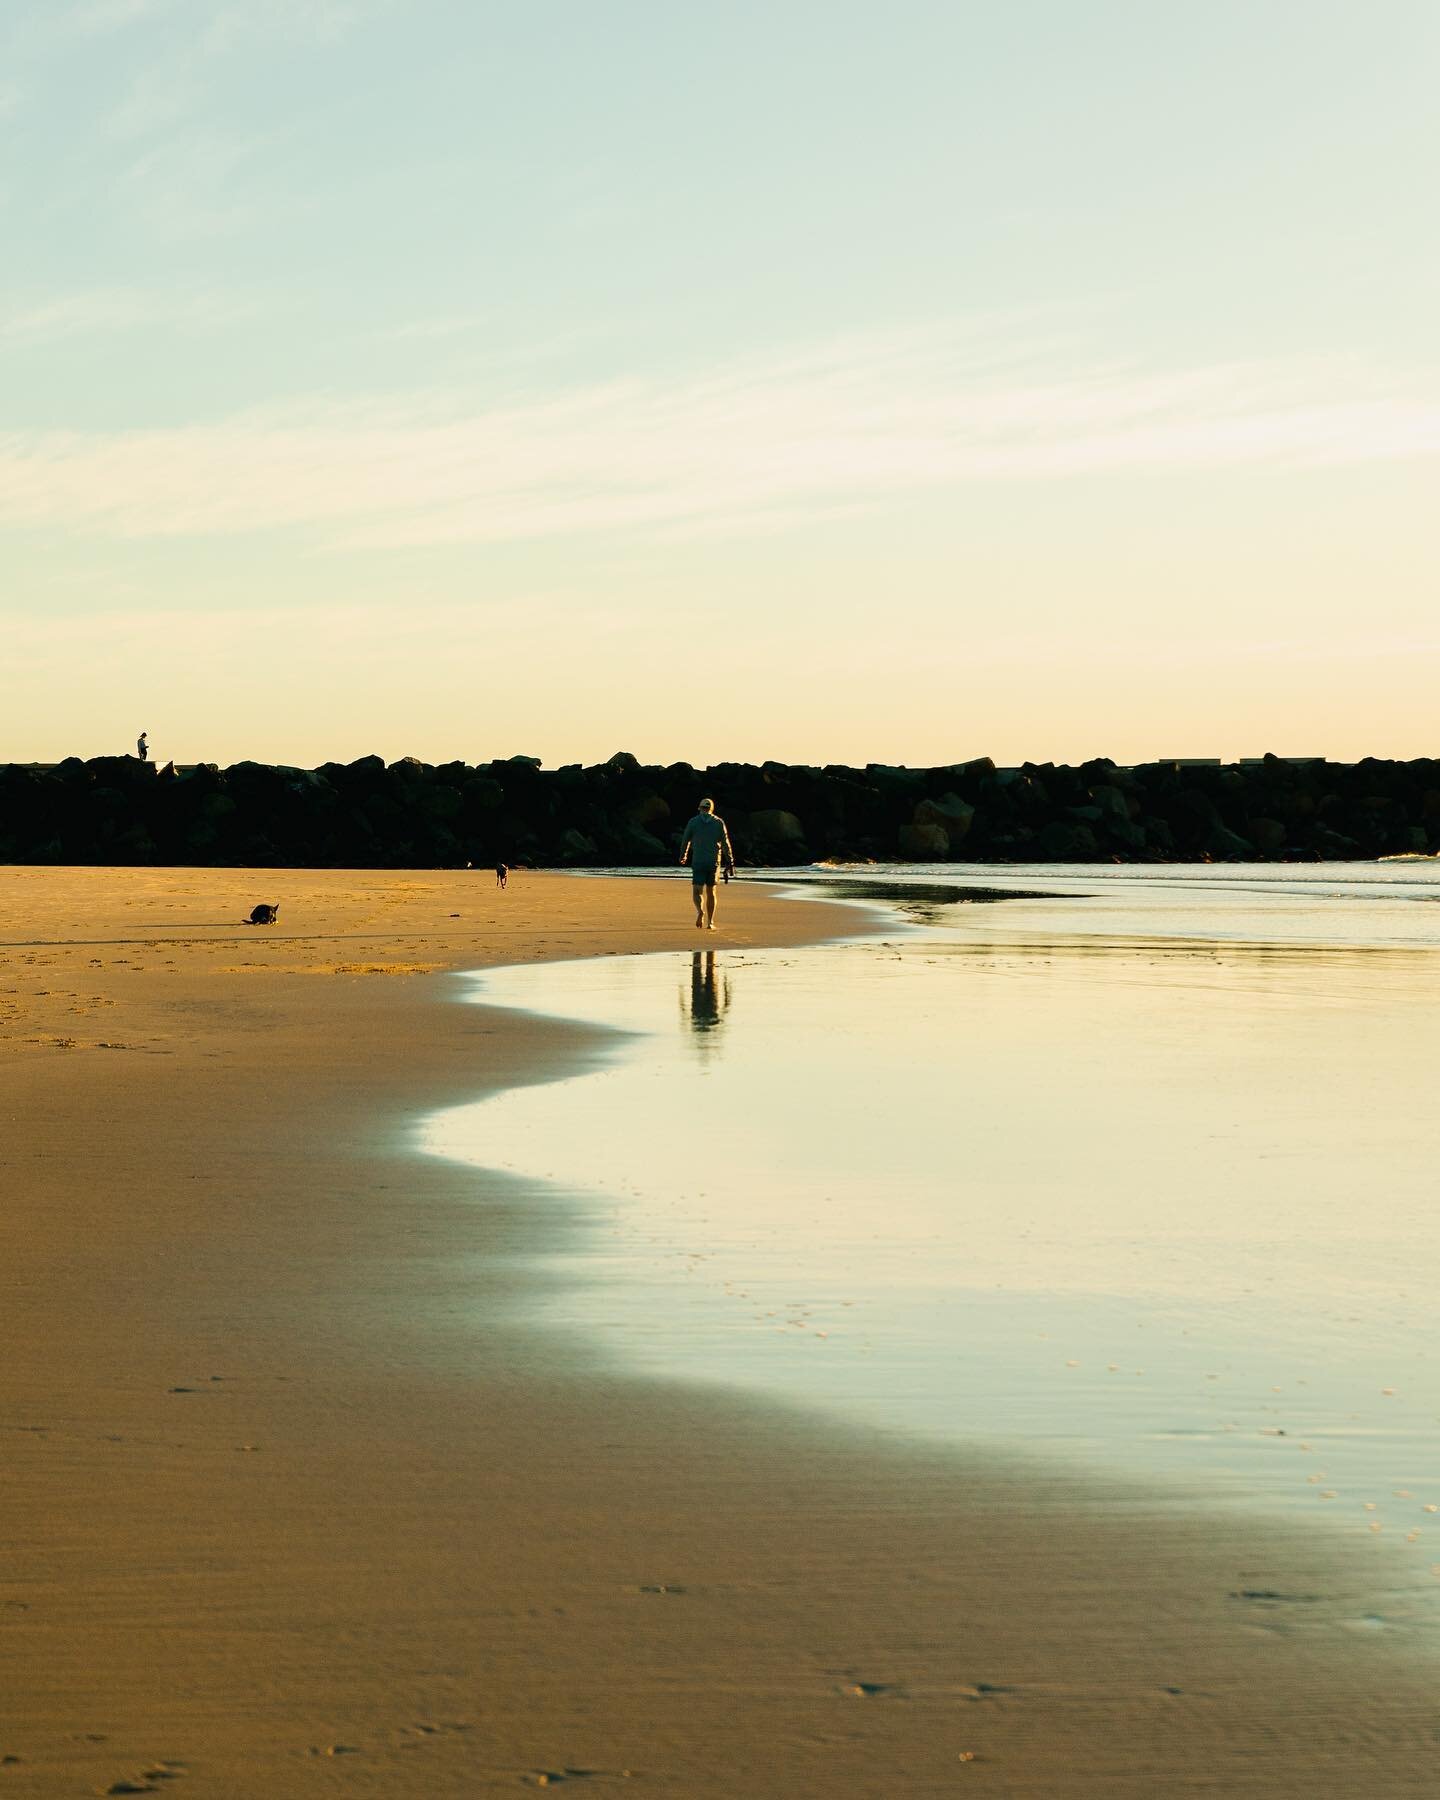 Long walks on the beach 
.
.
.
.
.

#photography #landscapephotography #seascape #landscape #seascapephotography #povphotography #youtube #canonaustralia #canonphotography #canonr6 #photooftheday #sunrise #opticalwander #cpphotos #puregoldcoast #pure